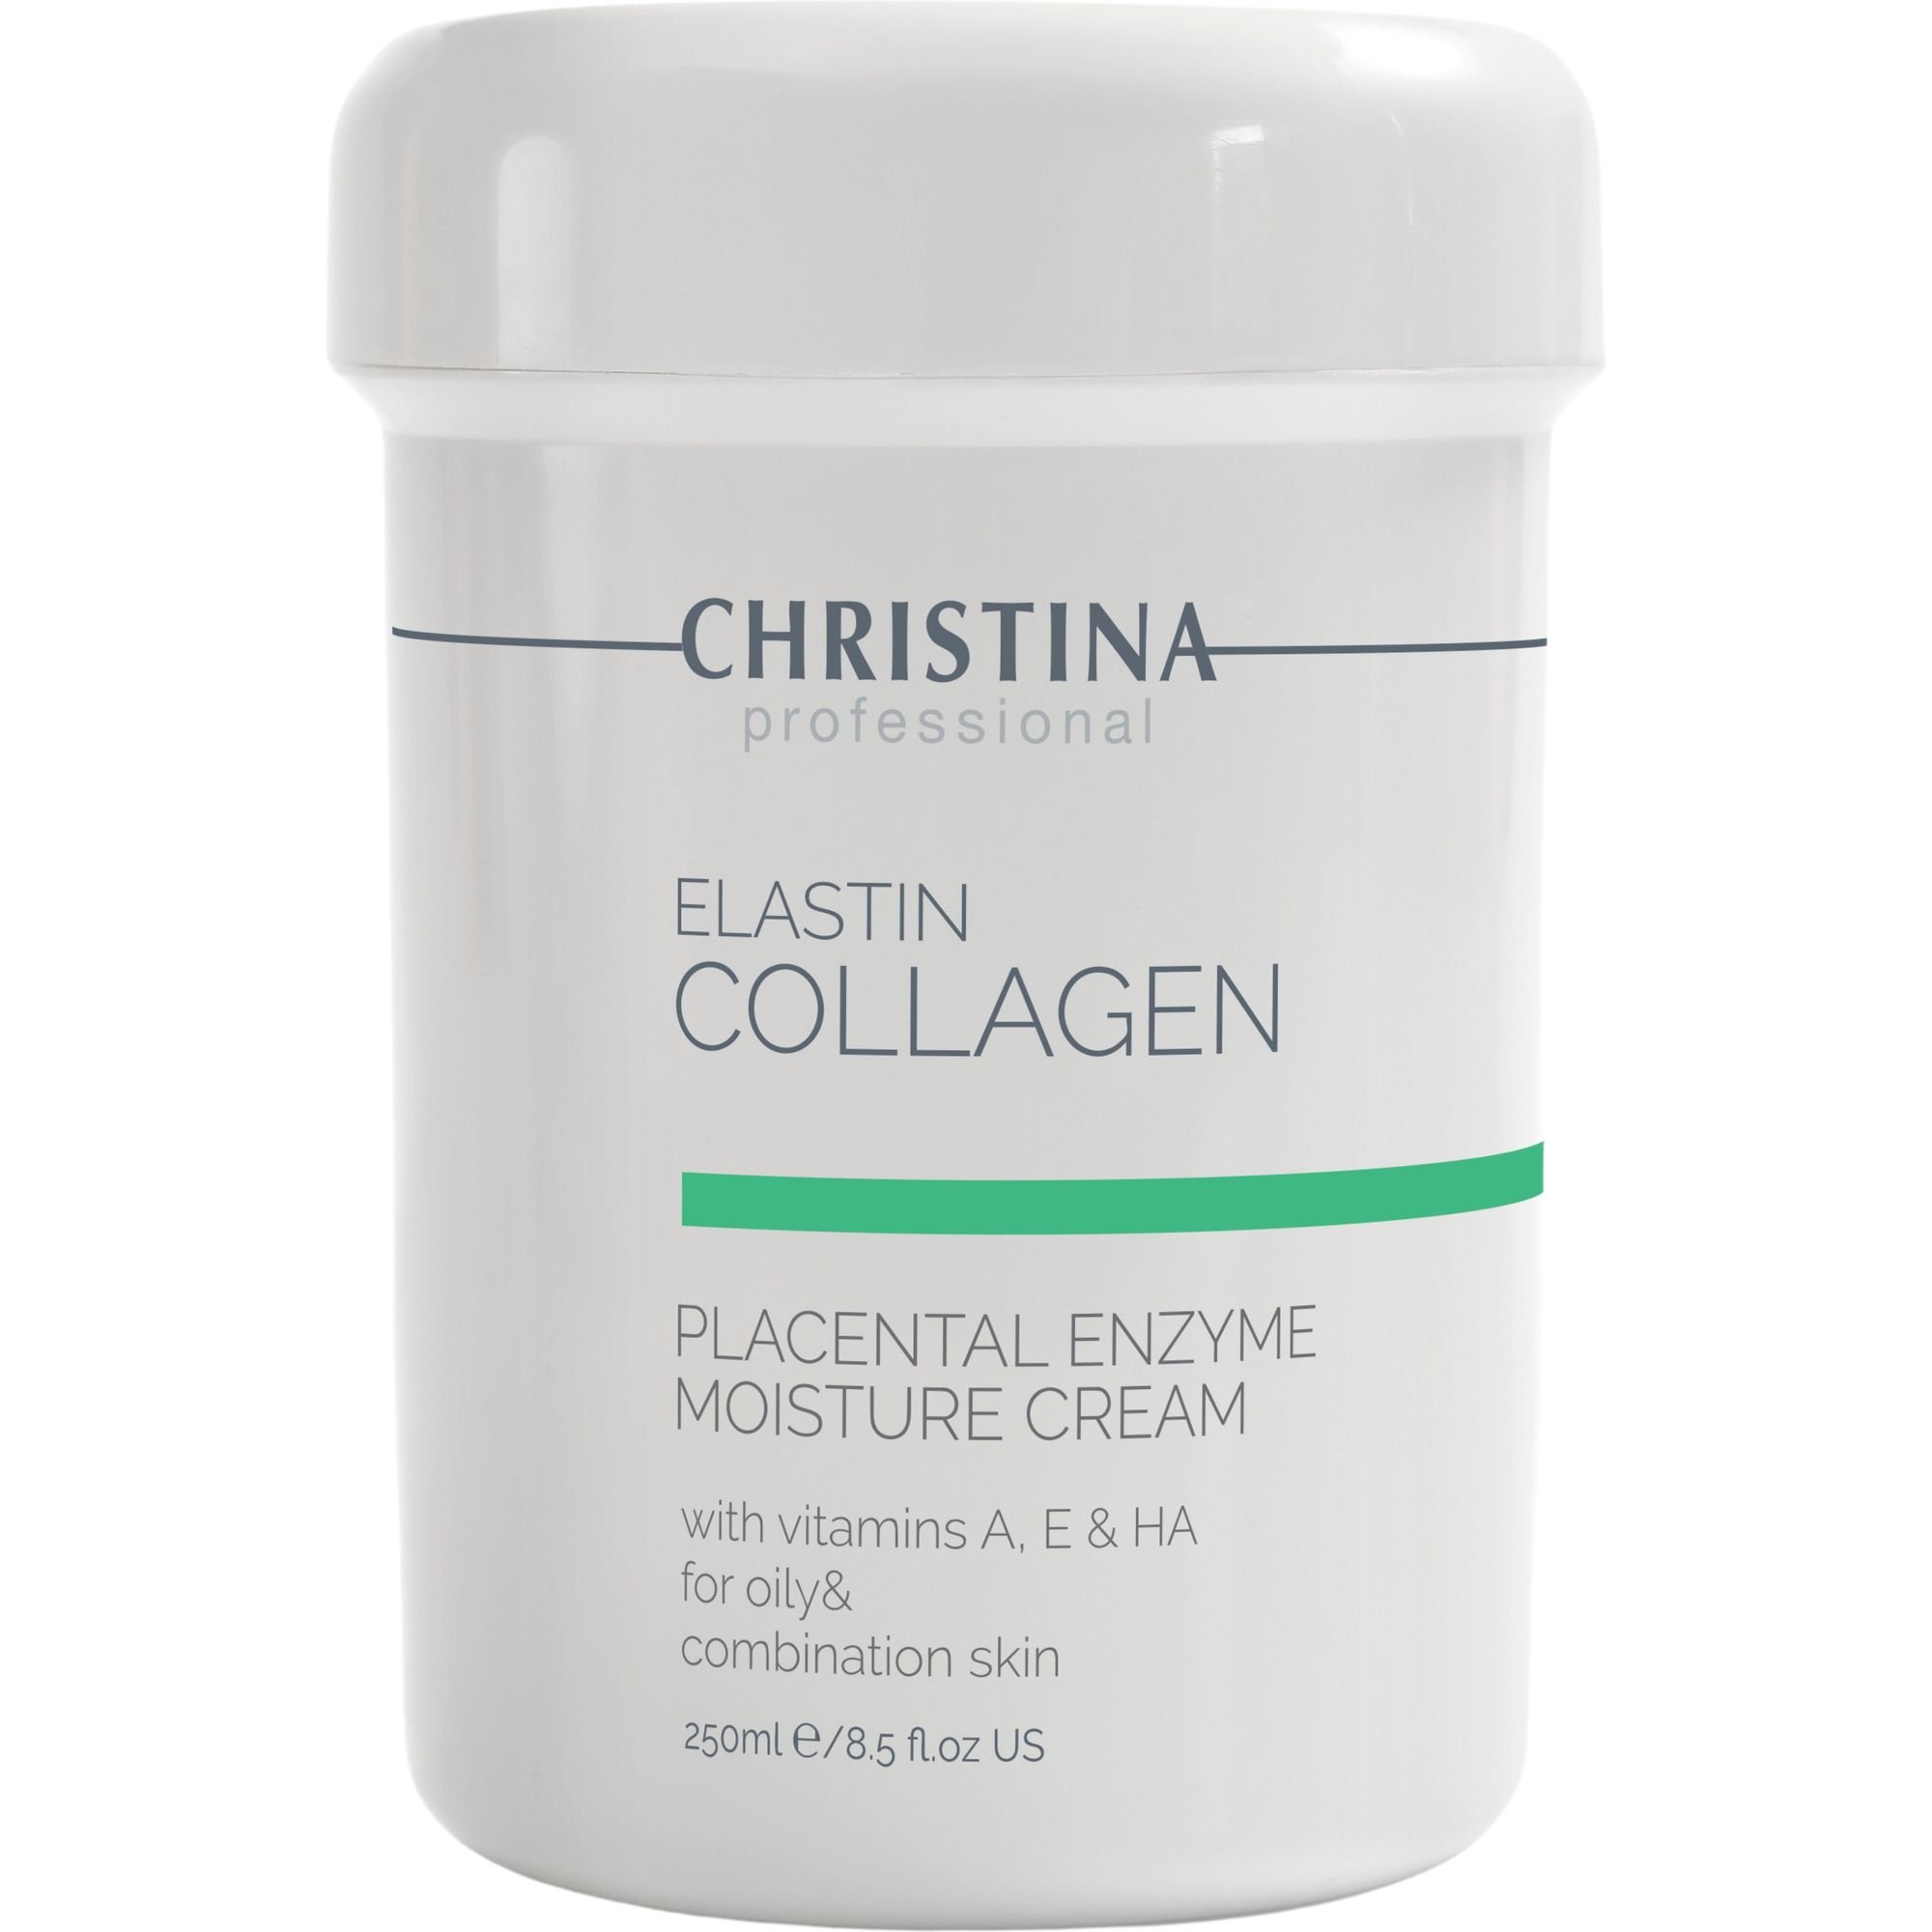 Зволожувальний крем для жирної шкіри Christina Elastin Collagen Placental Enzyme Moisture Cream with Vitamins A, E & HA 250 мл - фото 1